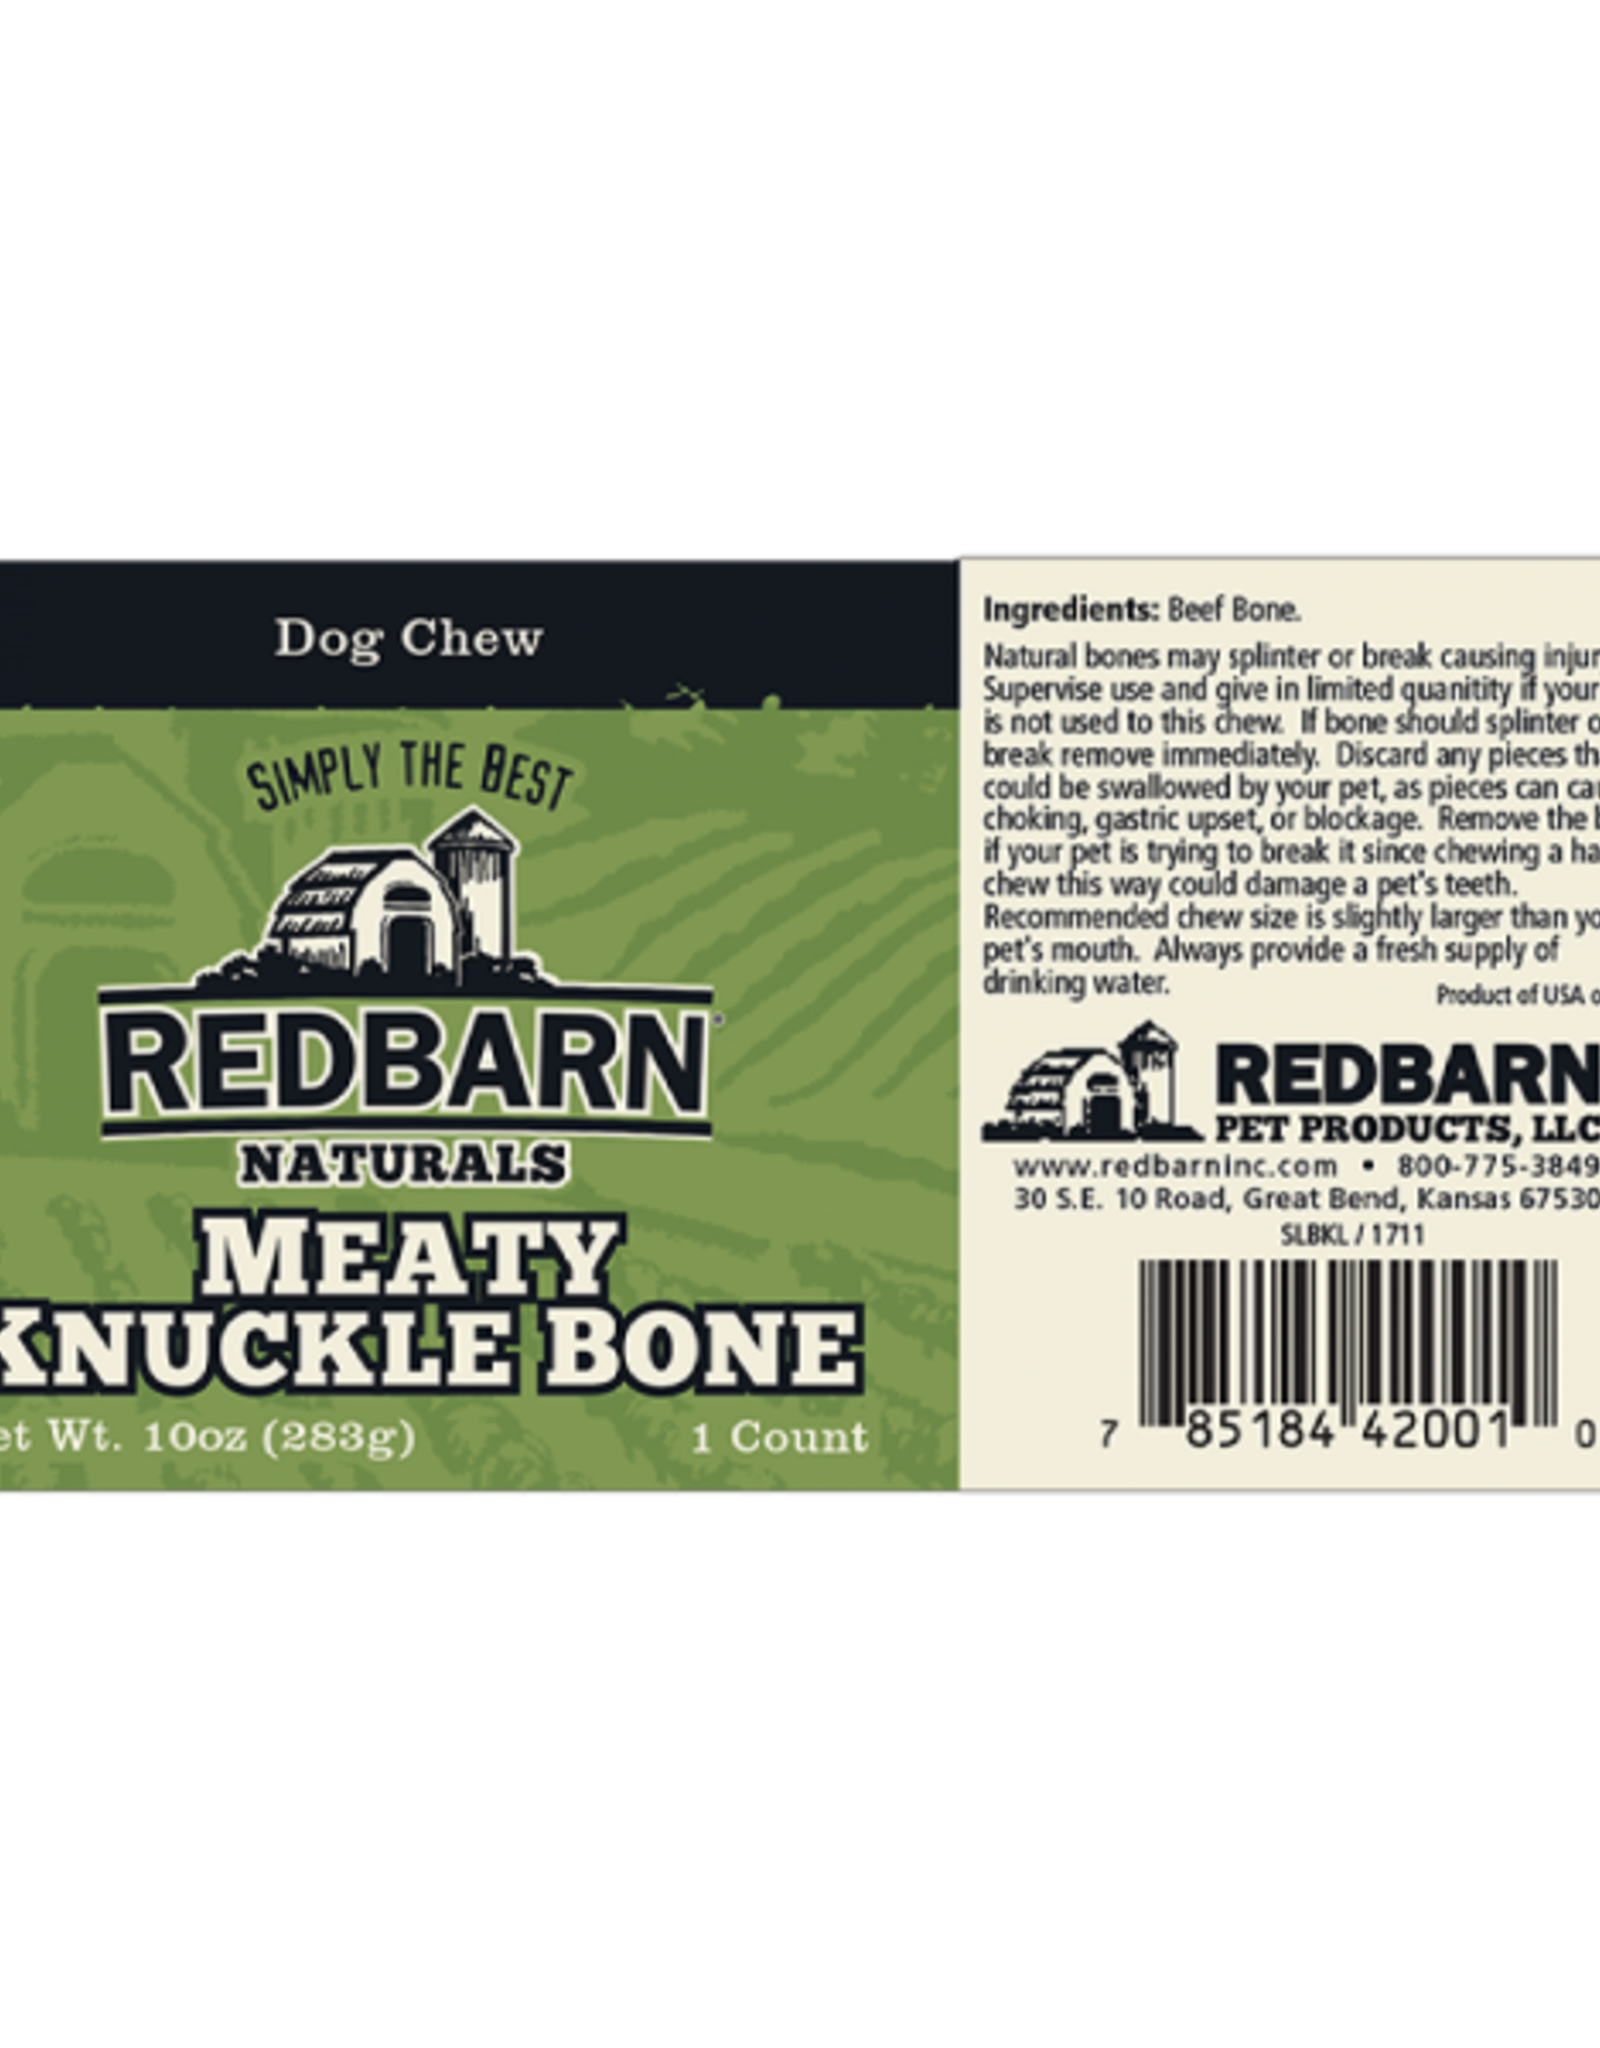 REDBARN PET PRODUCTS INC REDBARN MEATY KNUCKLE